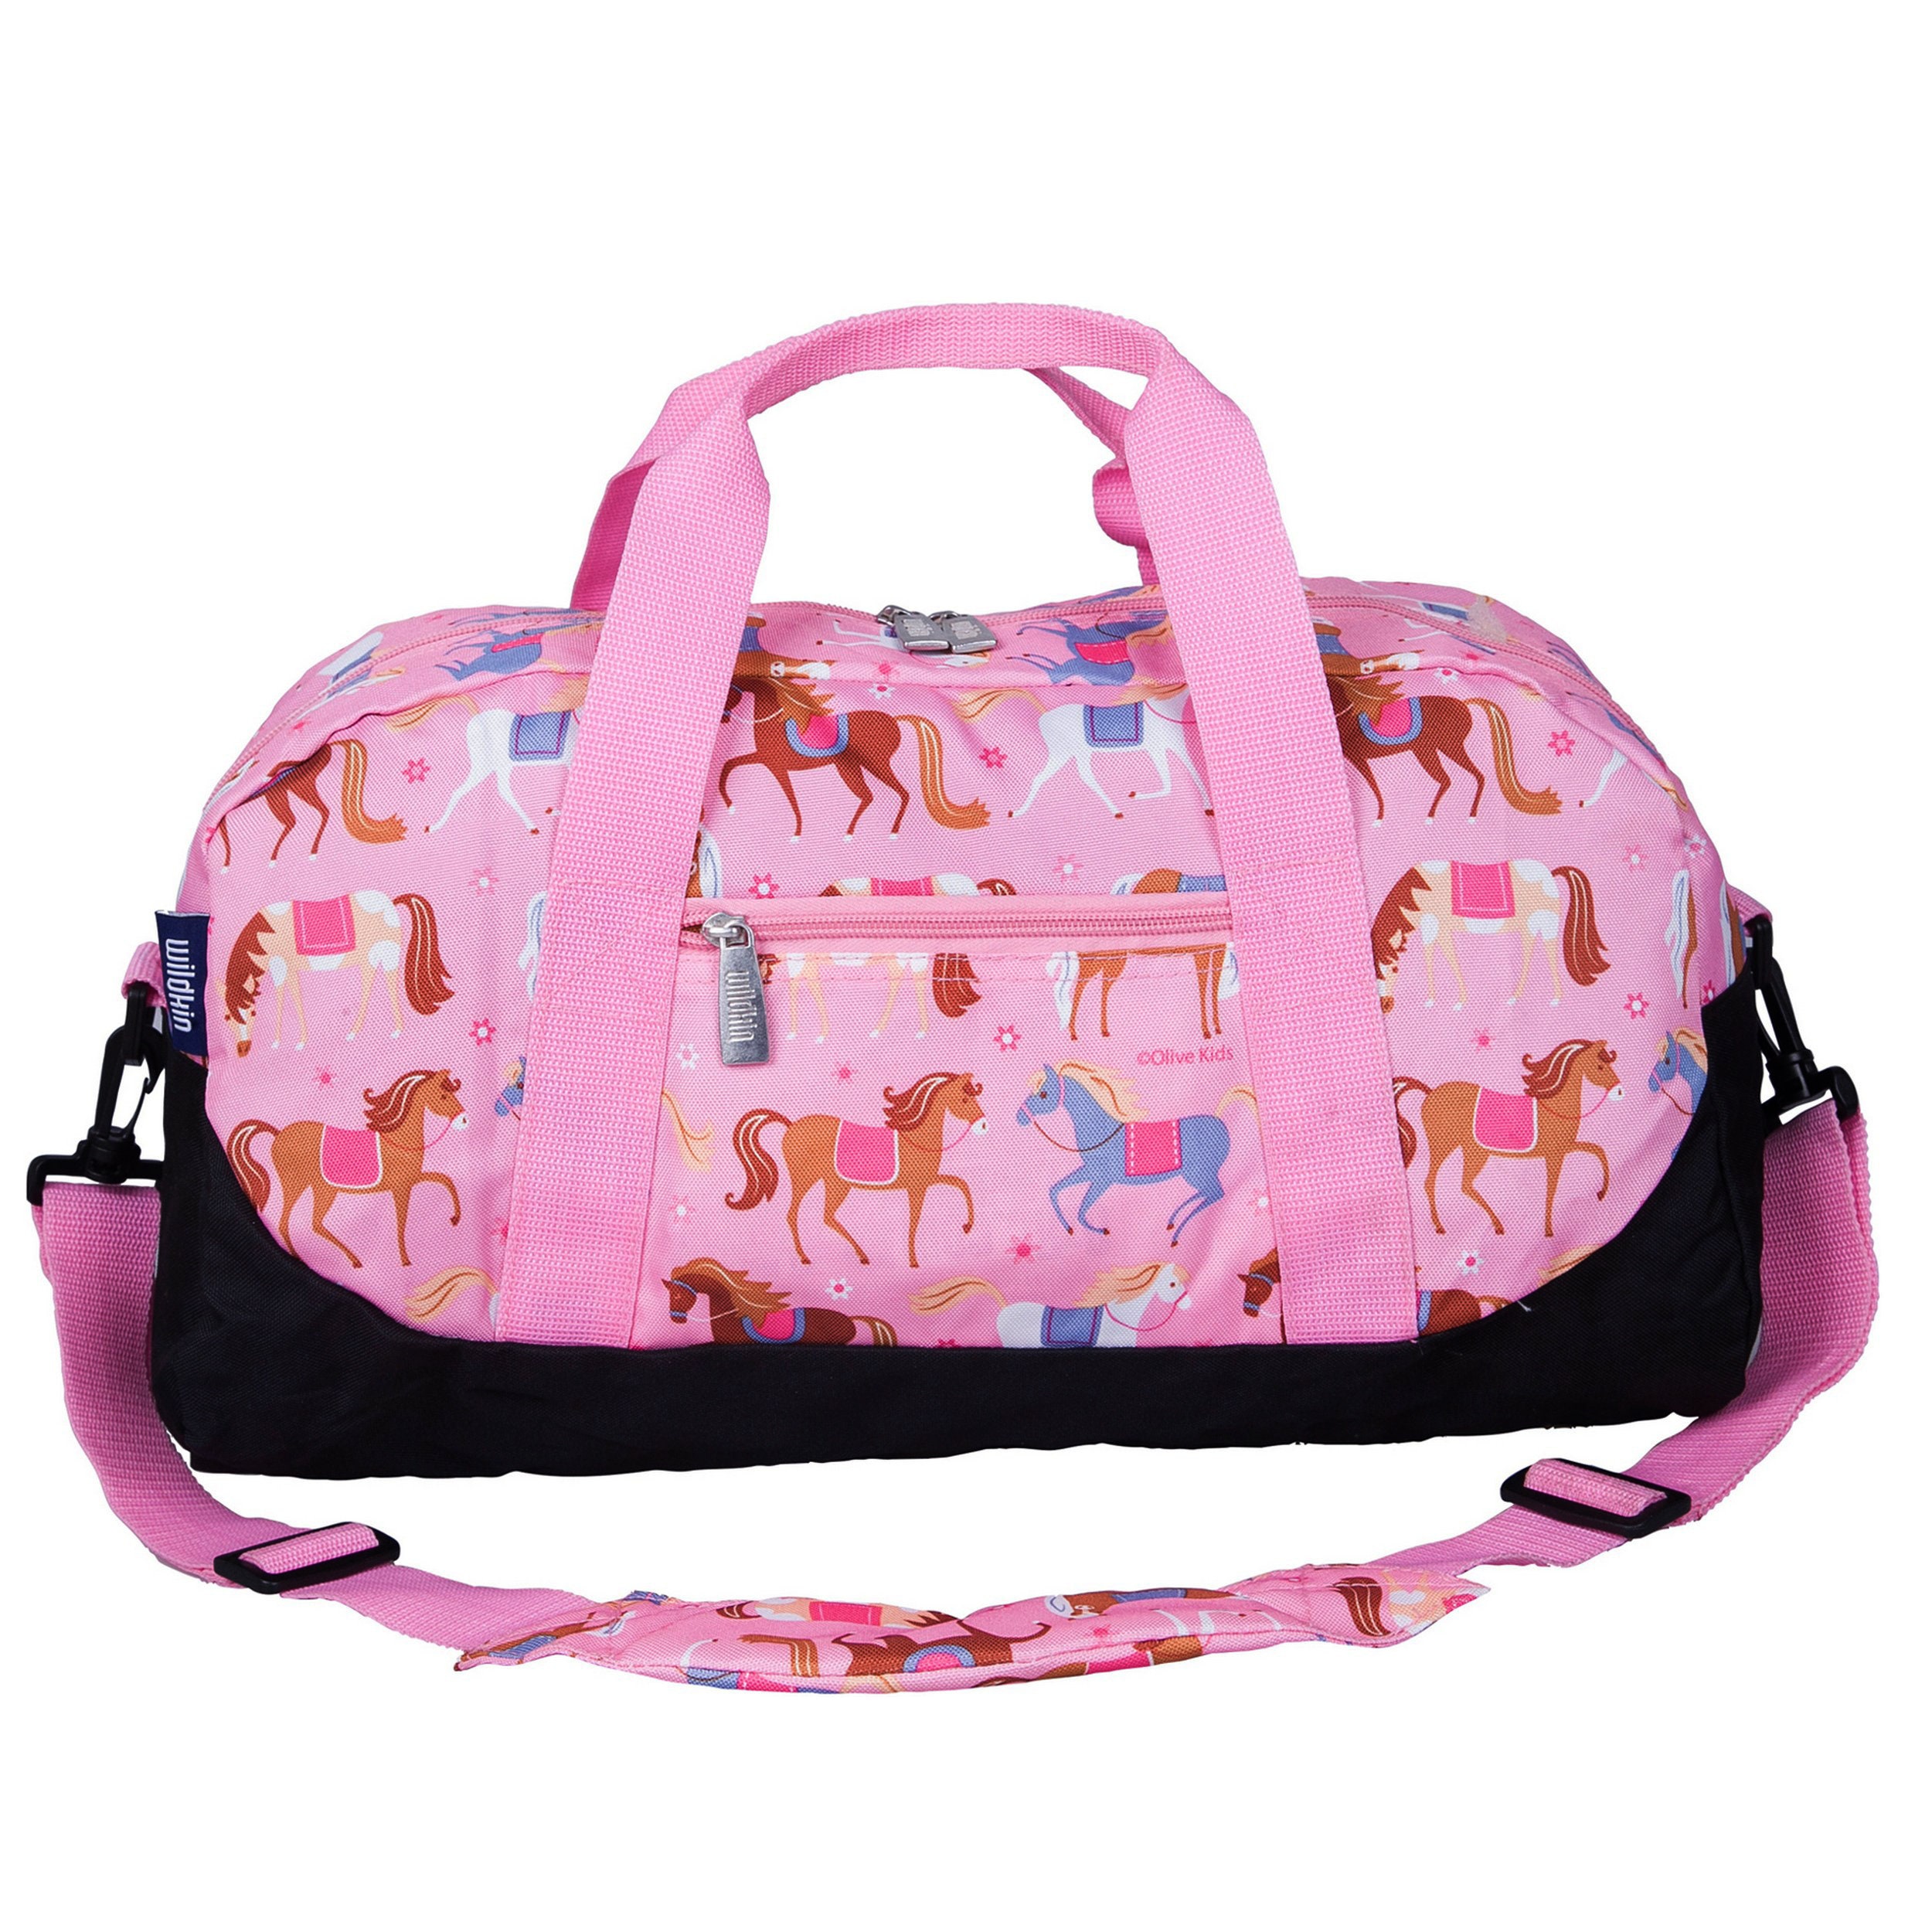 Wildkin Kids Weekender Travel Duffel Bags for Boys & Girls (Pink Stripes)